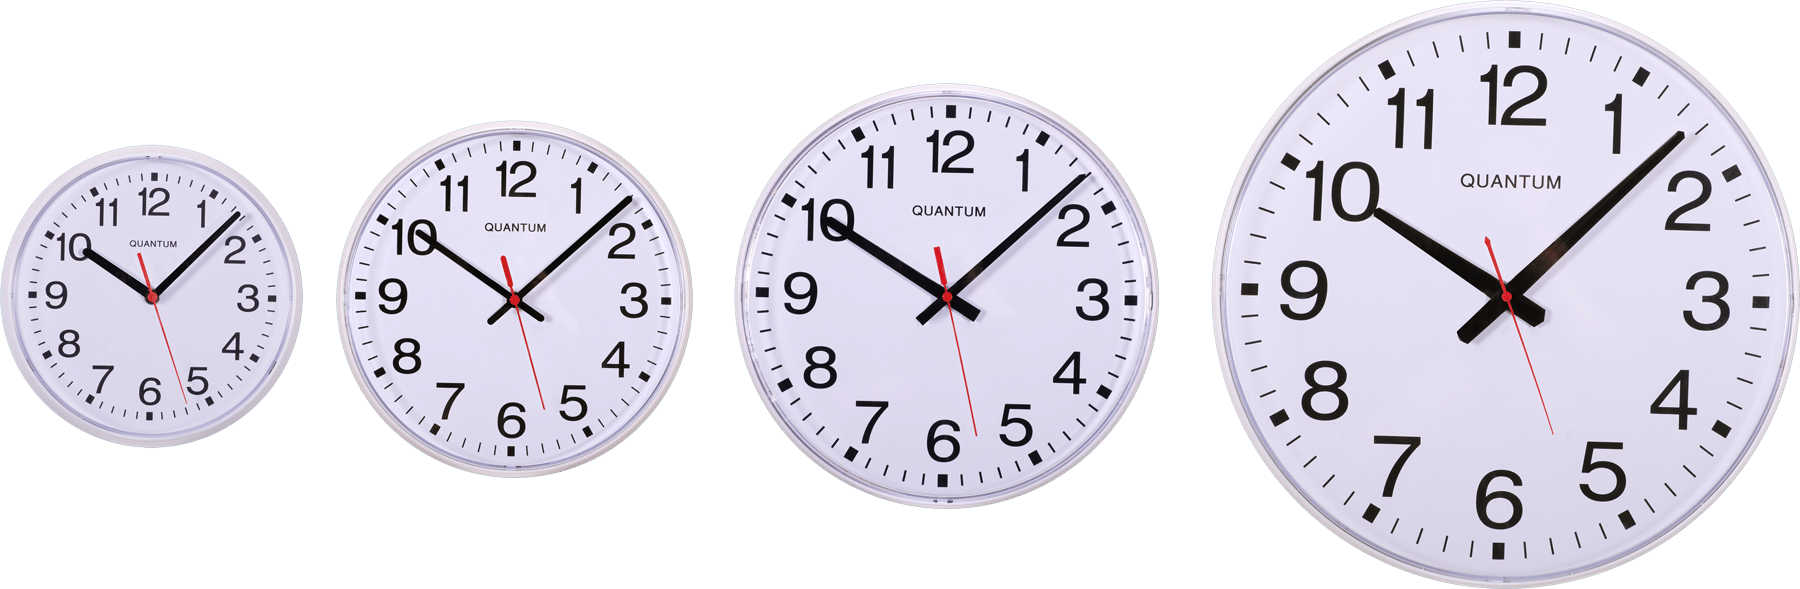 Analogue Clocks